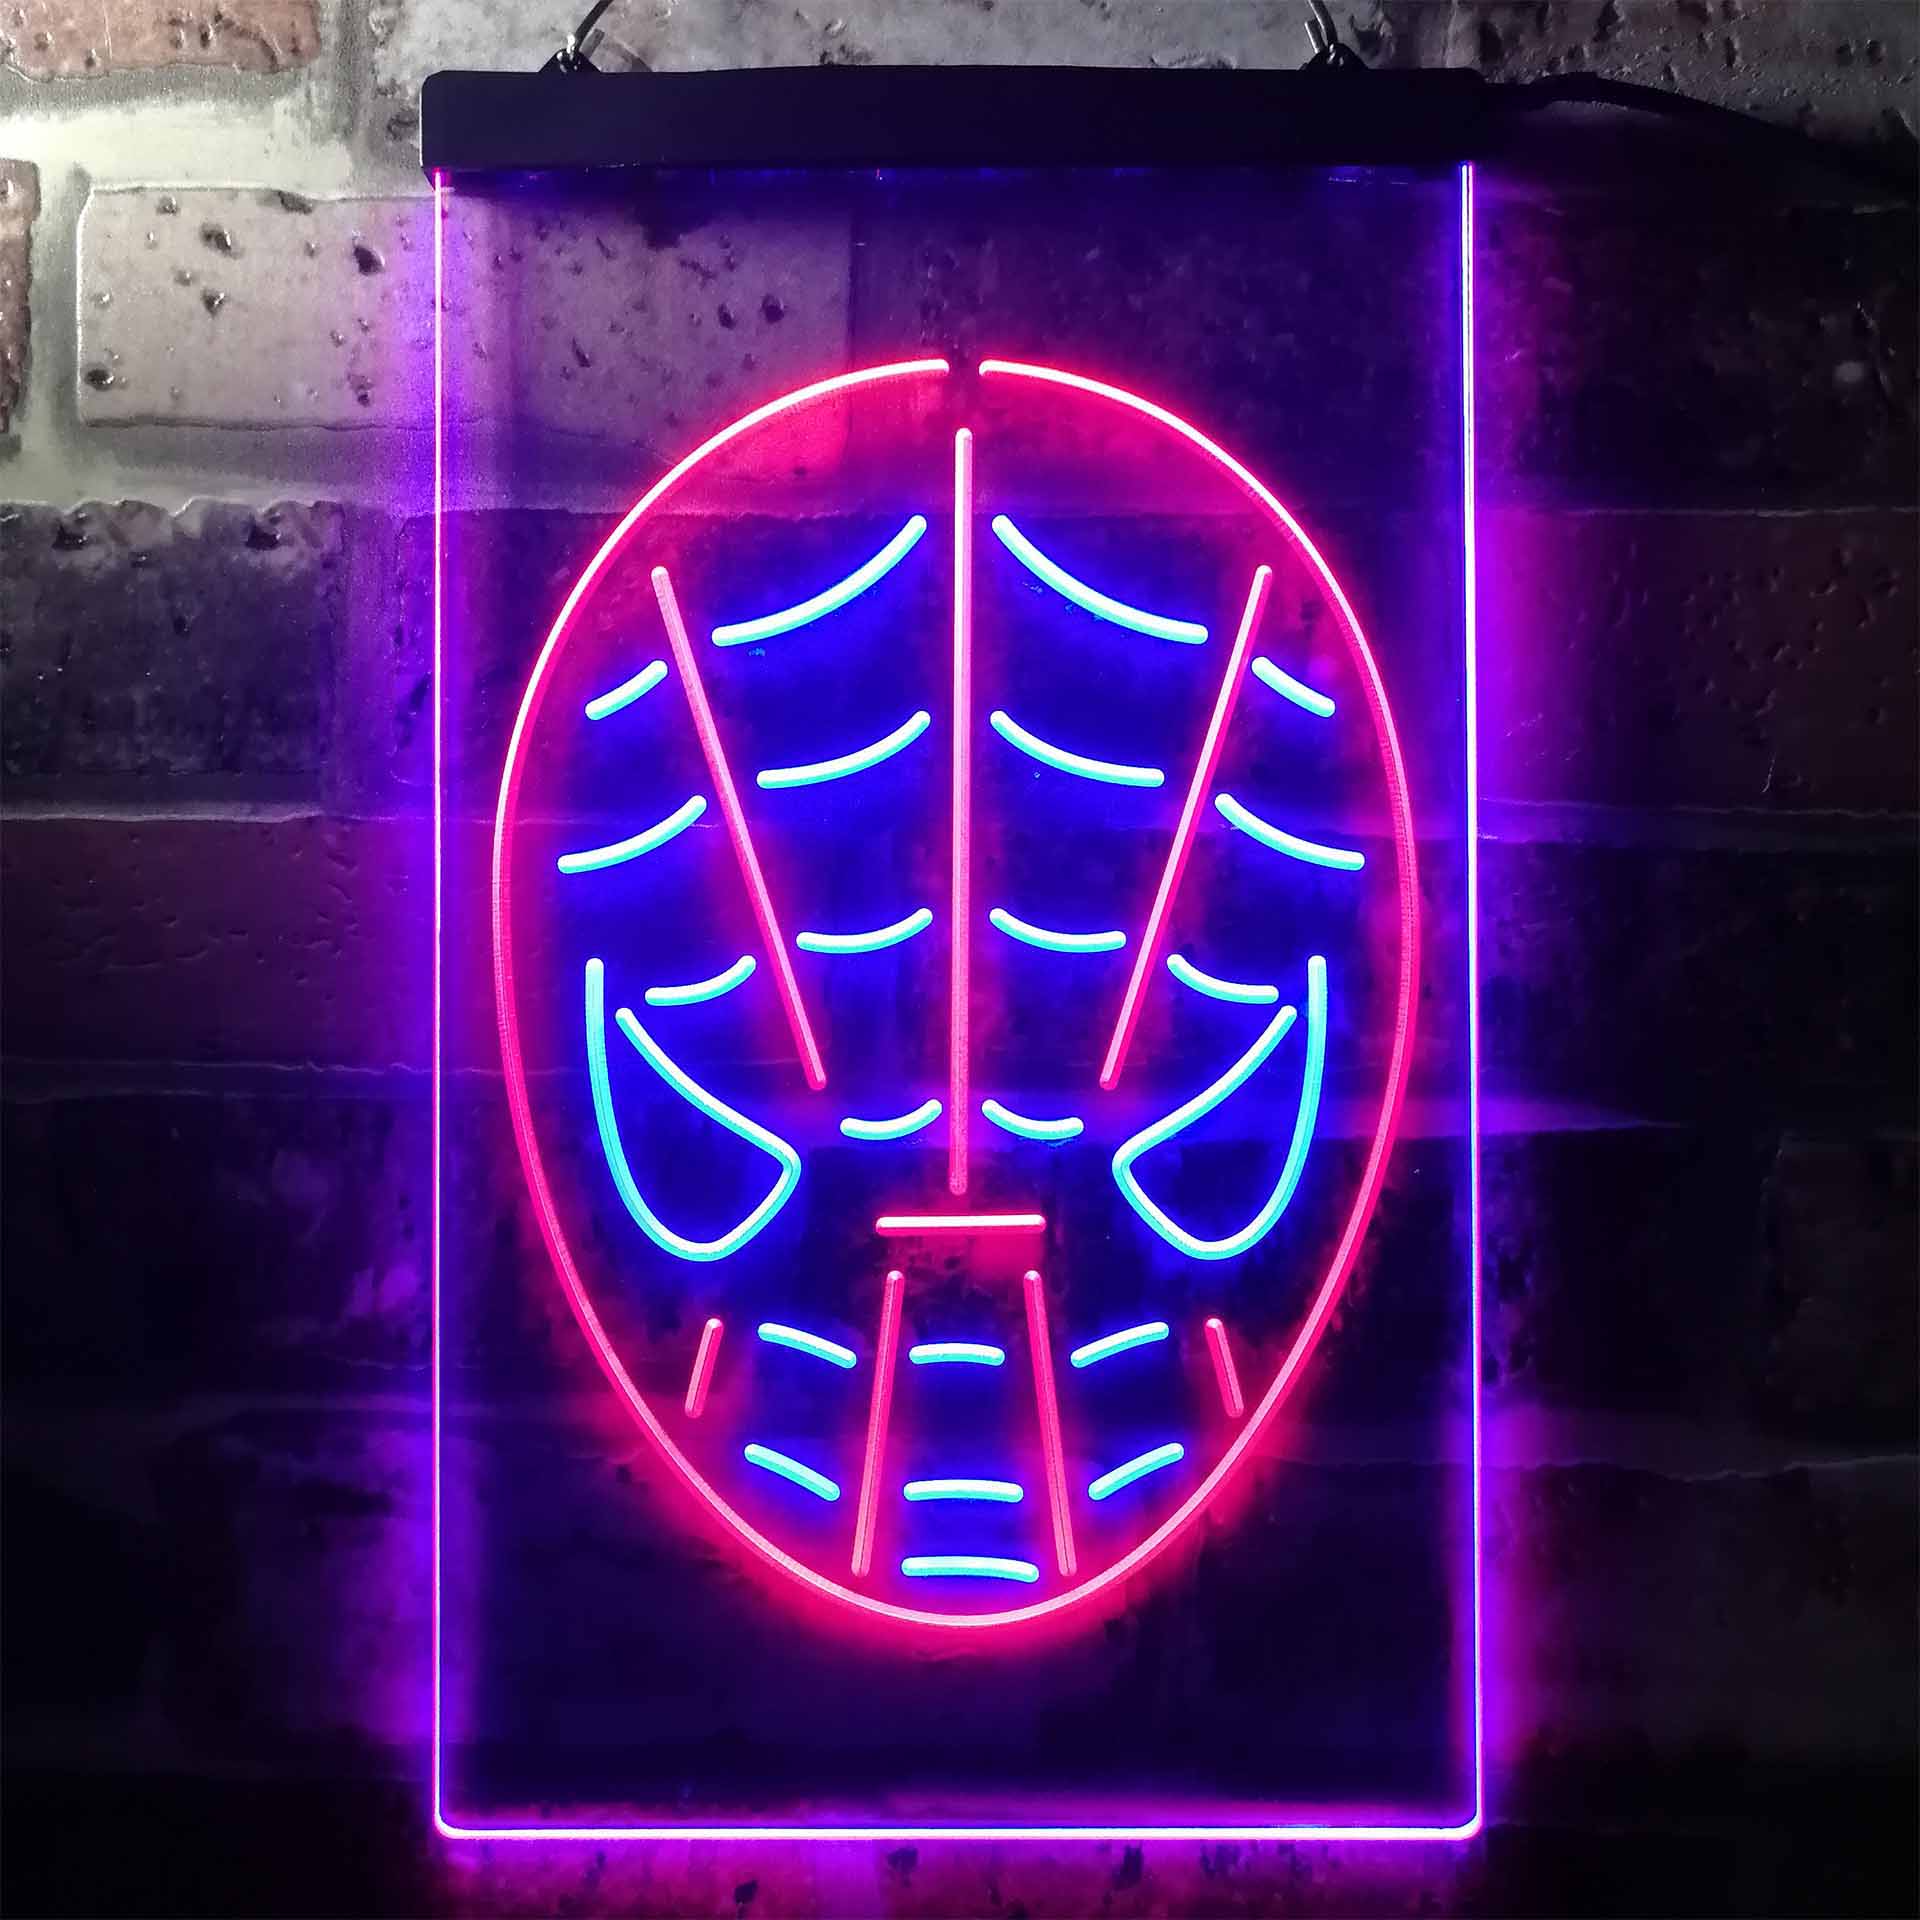 Spiderman Game Room Display Neon-Like LED Sign